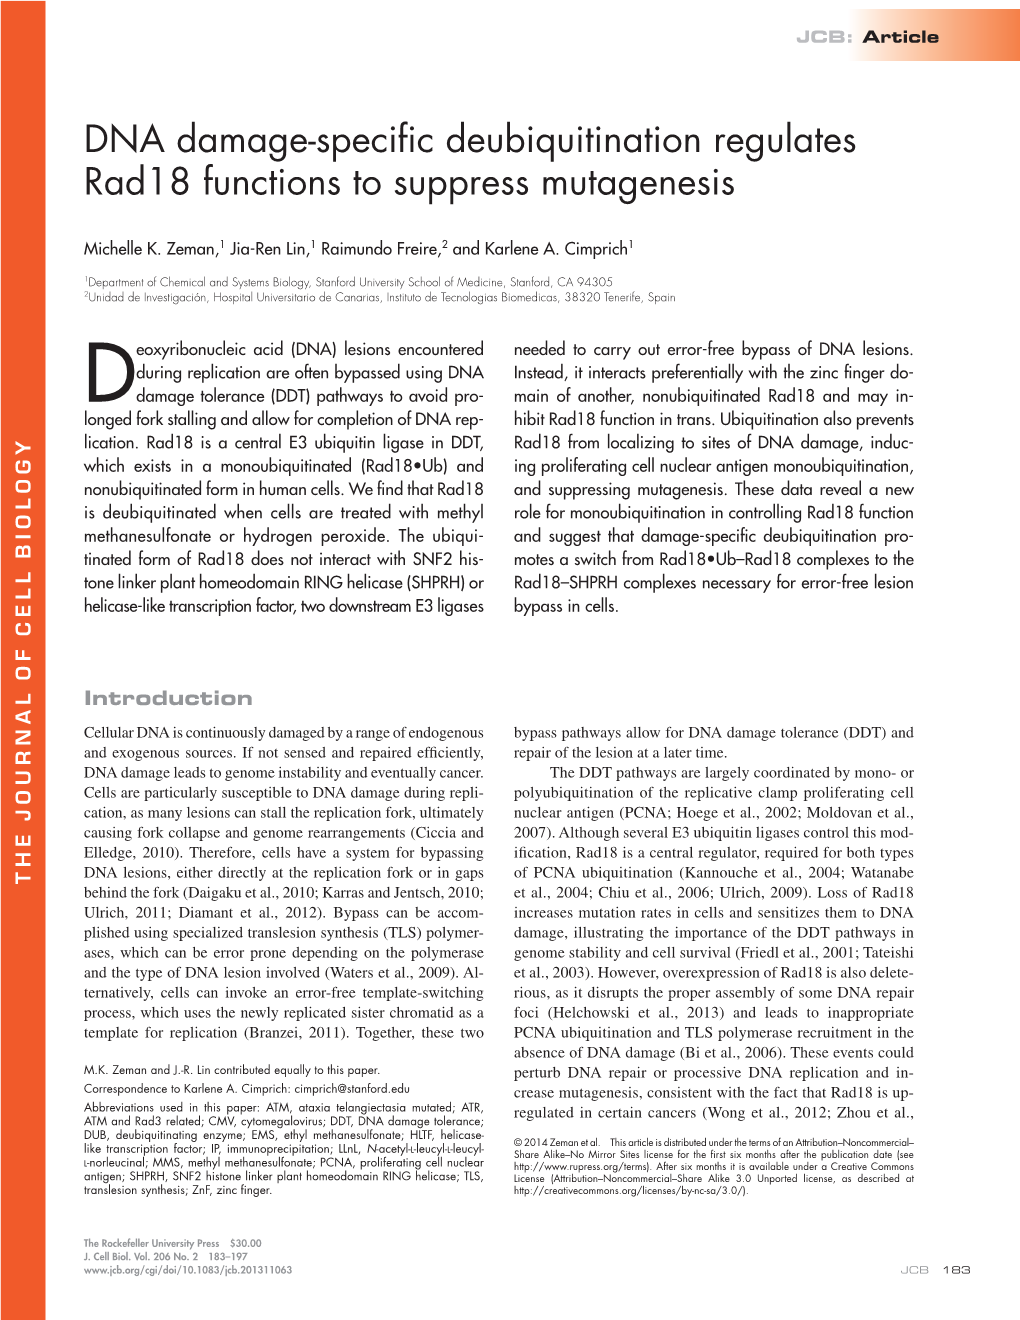 DNA Damage-Specific Deubiquitination Regulates Rad18 Functions to Suppress Mutagenesis